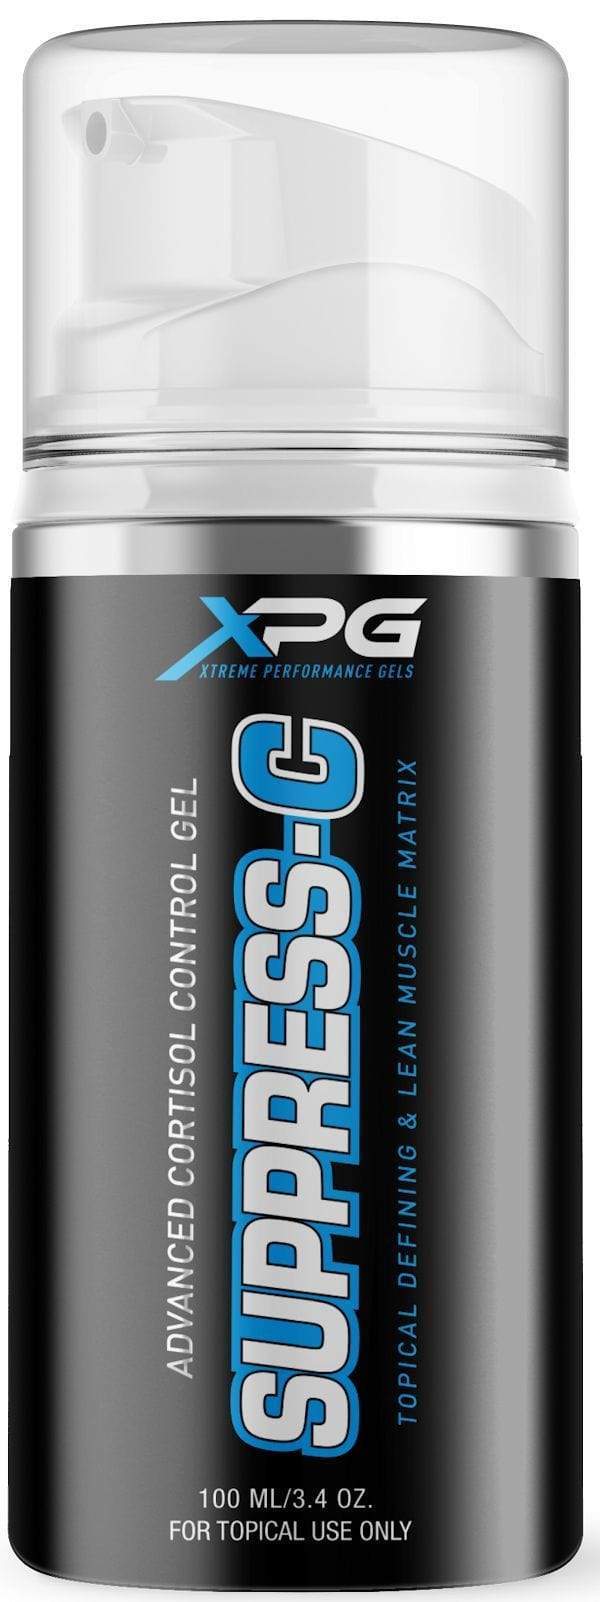 Xtreme Performance Gels XPG Suppress-C Defining & Lean Muscle